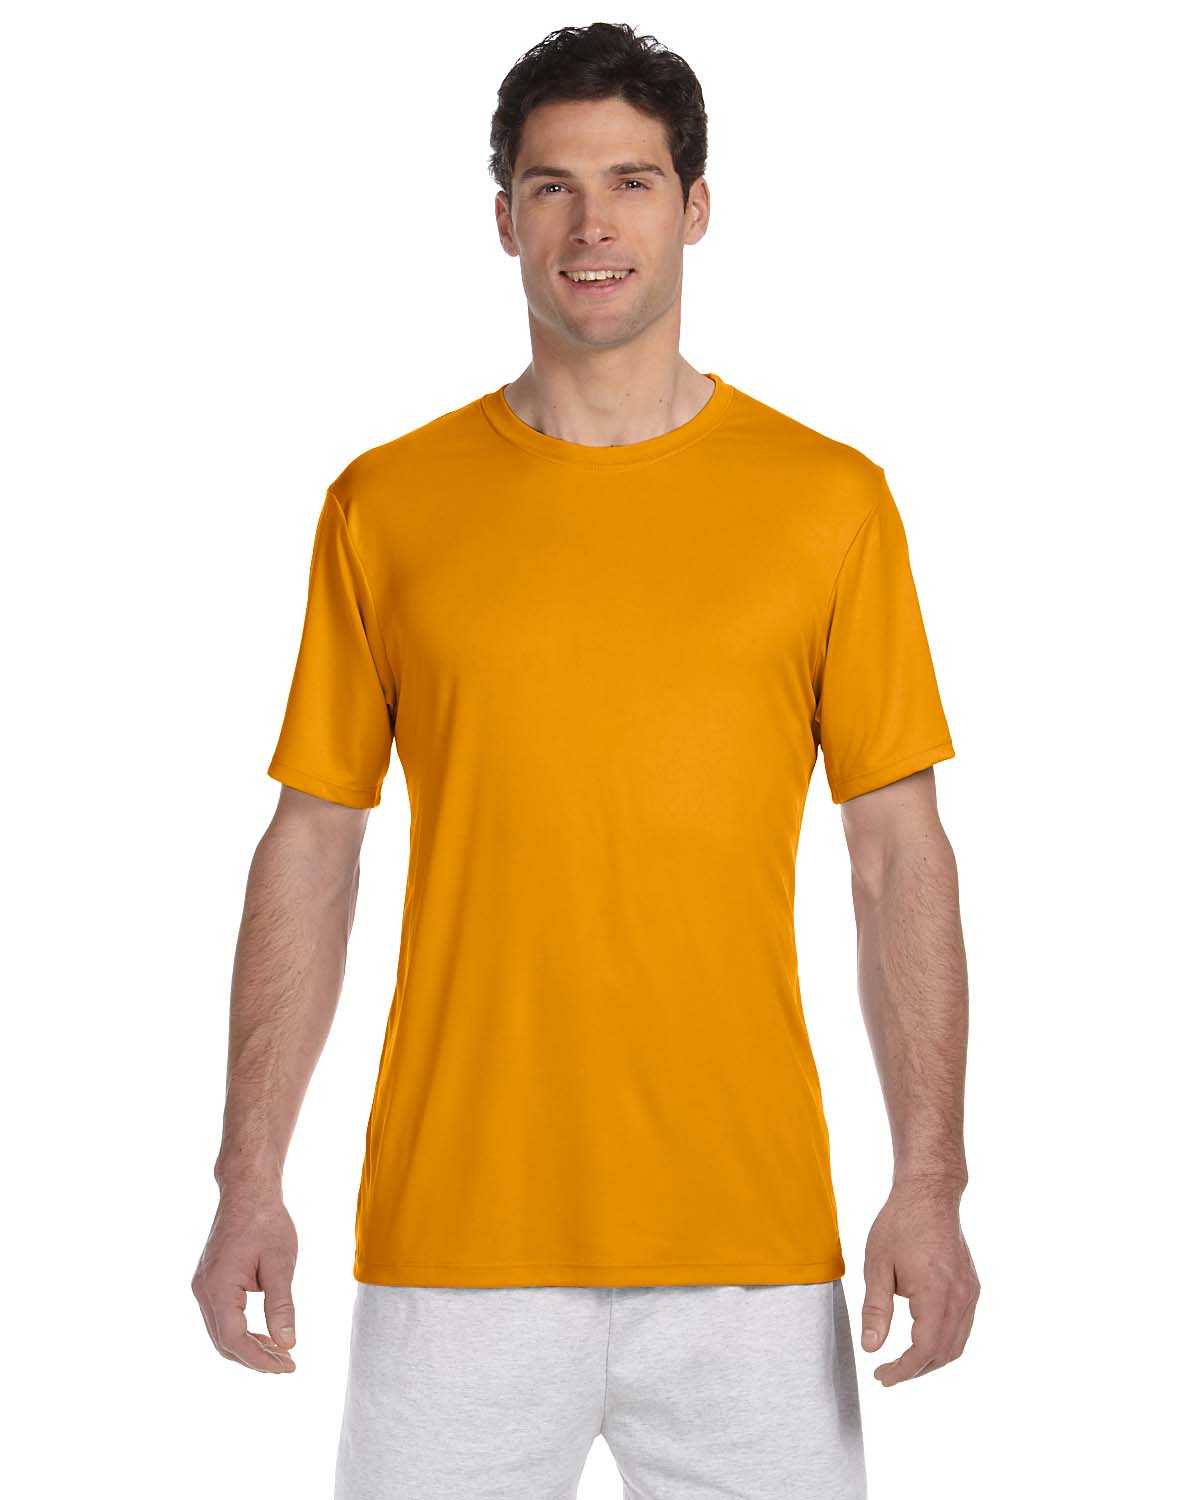 Hanes 4820 Men's Cool DRI with FreshIQ Performance T-Shirt | ApparelChoice.com